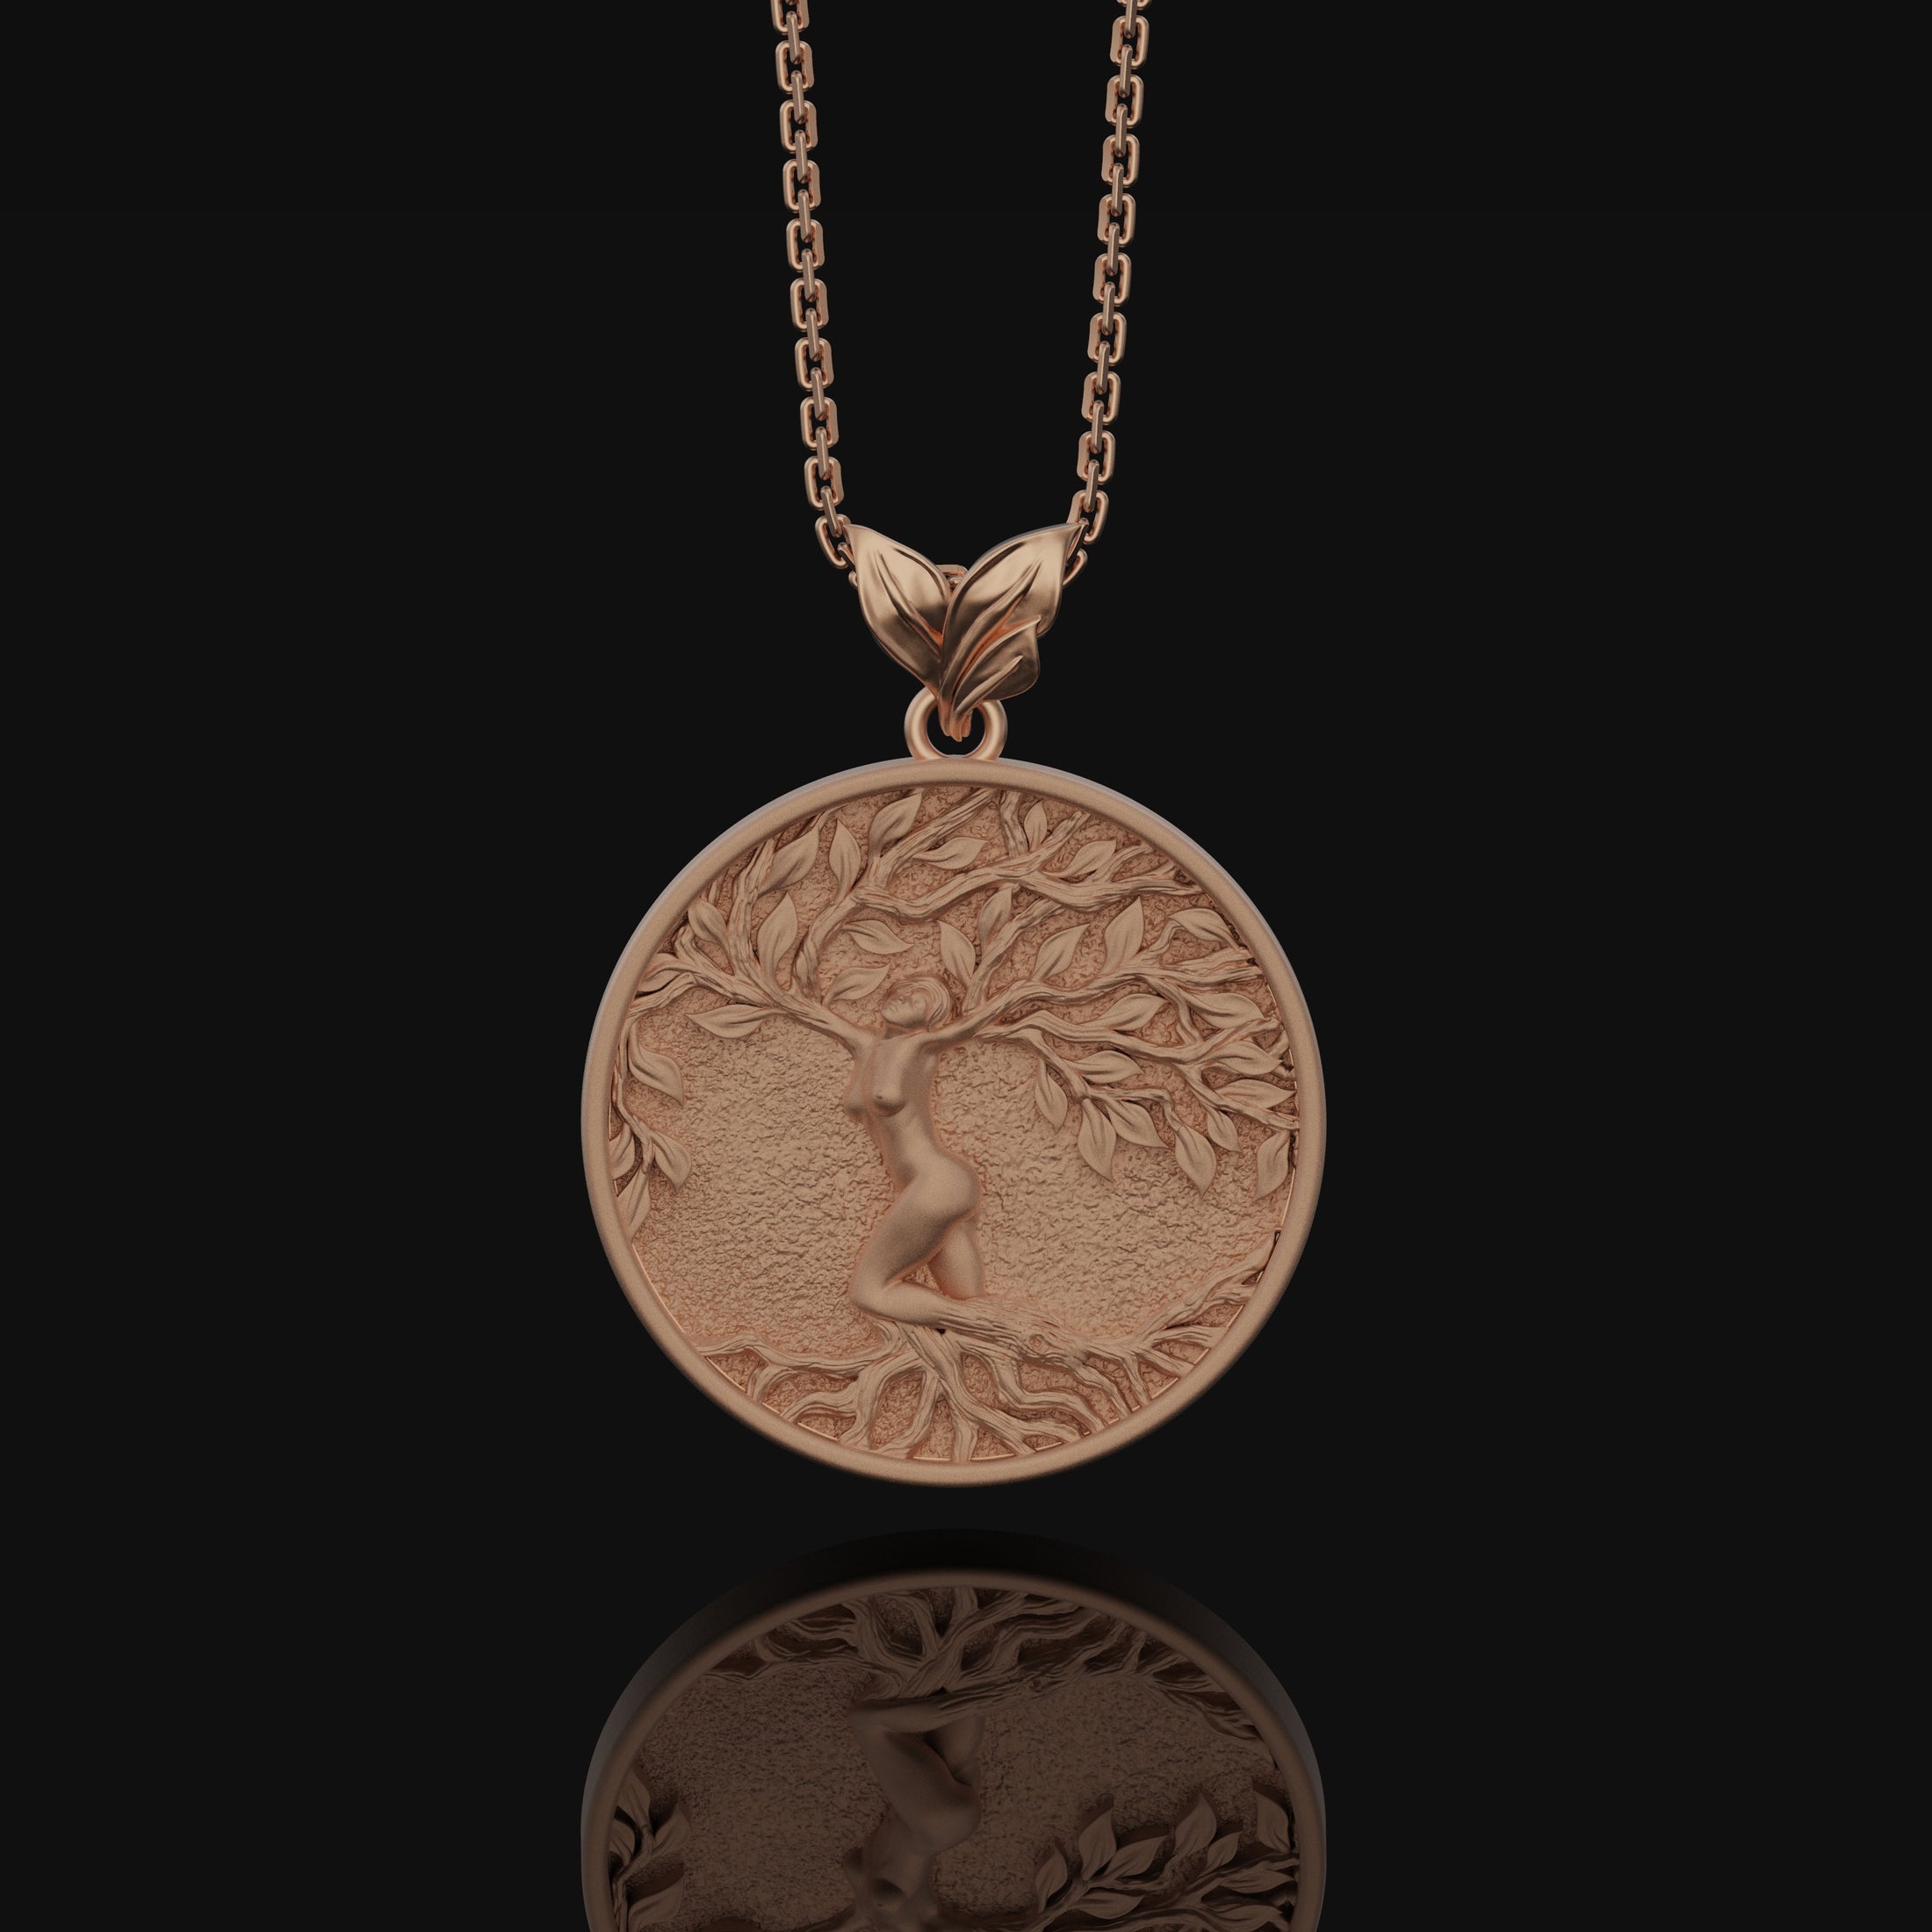 Yggdrasil Tree Of Life Pendant, Norse Mythology Gift, Vikings Asgard, Norse Mythology, Norse Pagan Necklace, Celtic World Tree Rose Gold Matte